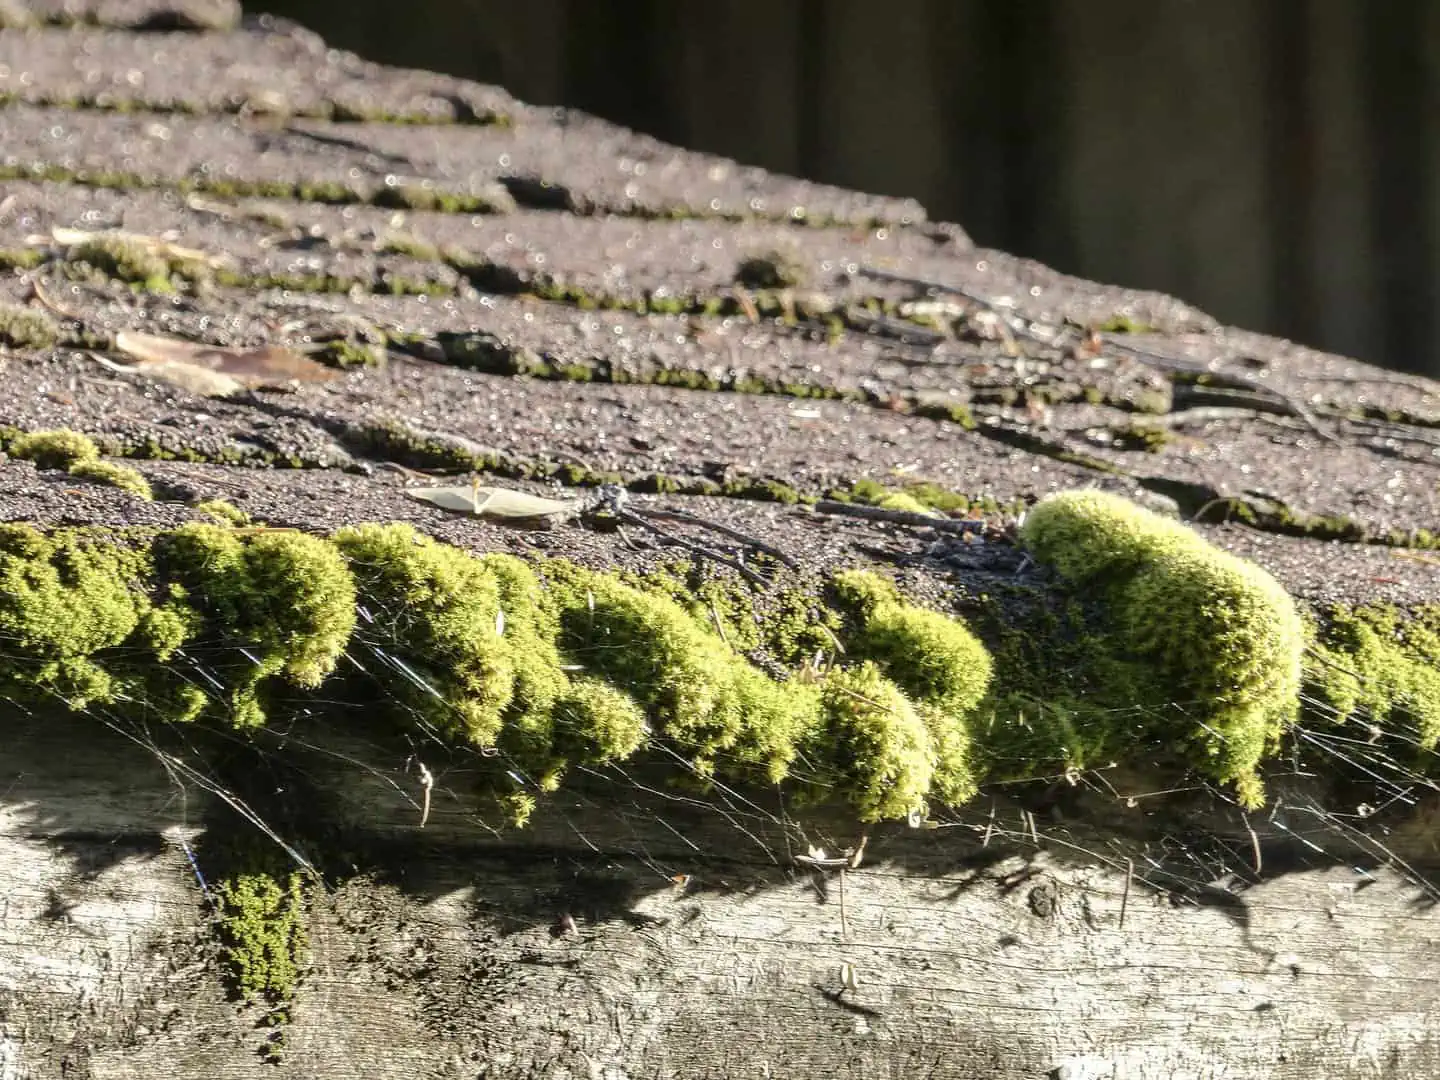 Moss growing underneath roof shingles